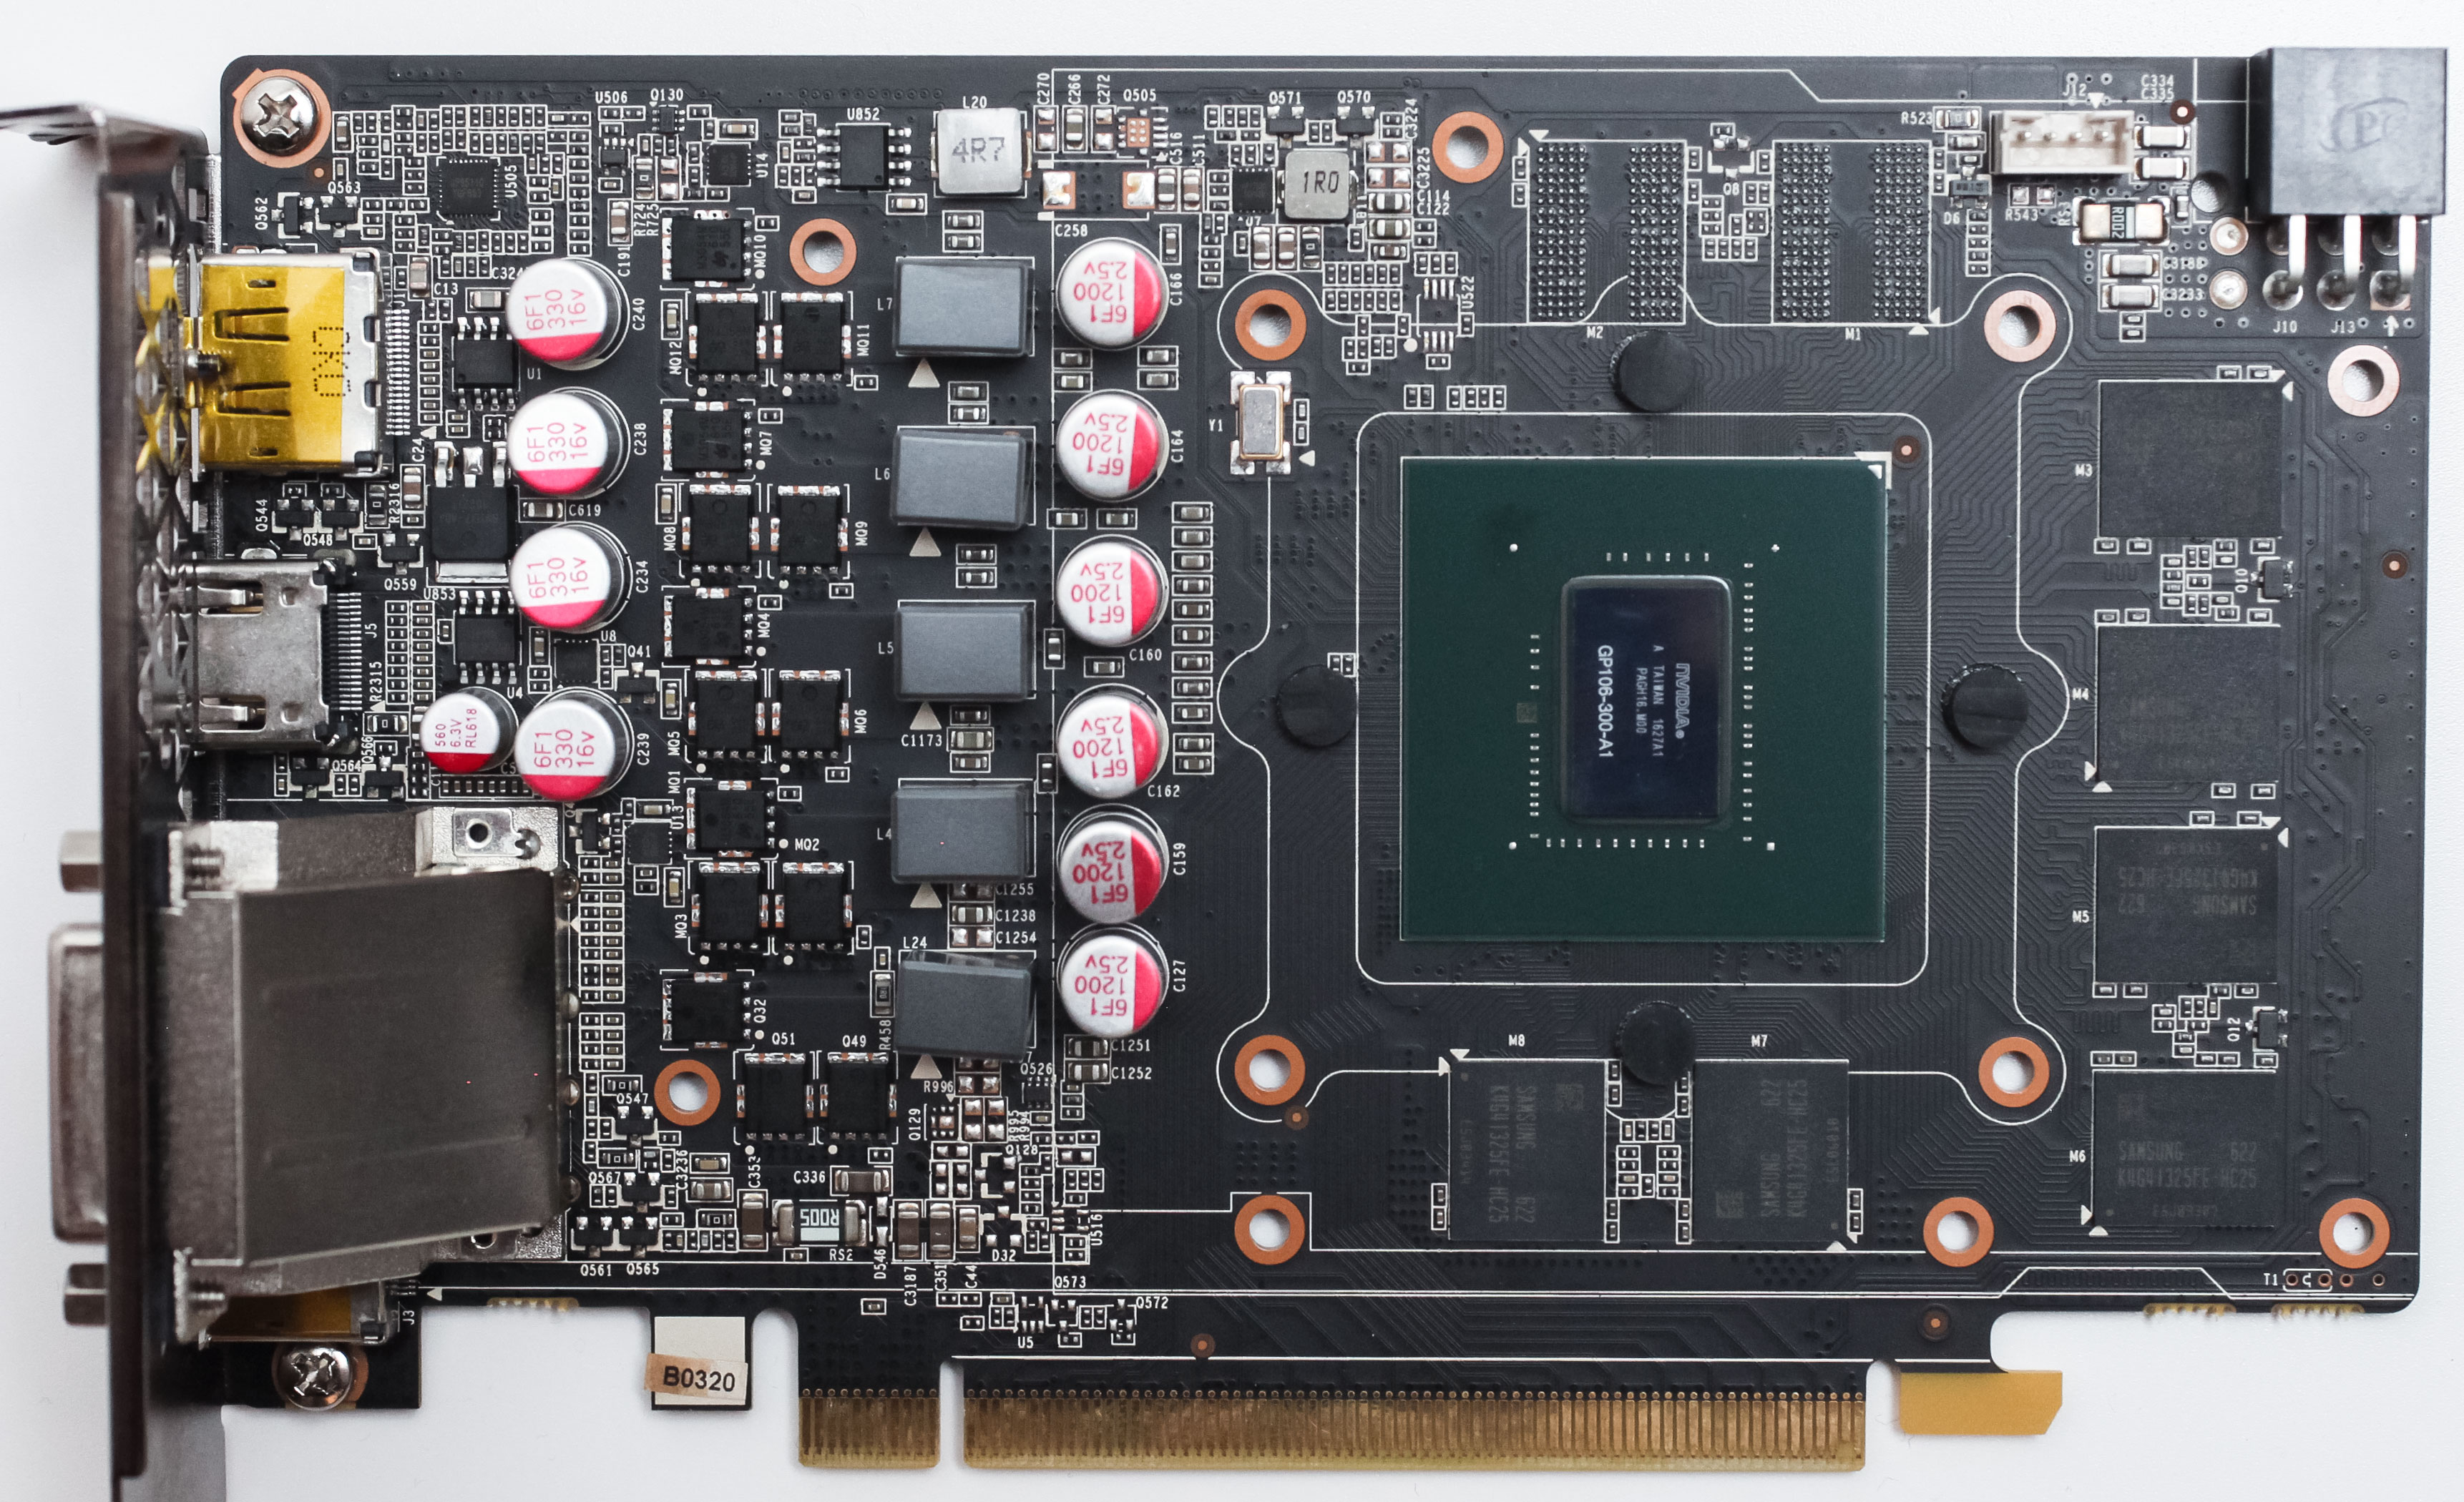 Zotac GeForce GTX 1060 Mini (6GB) Review